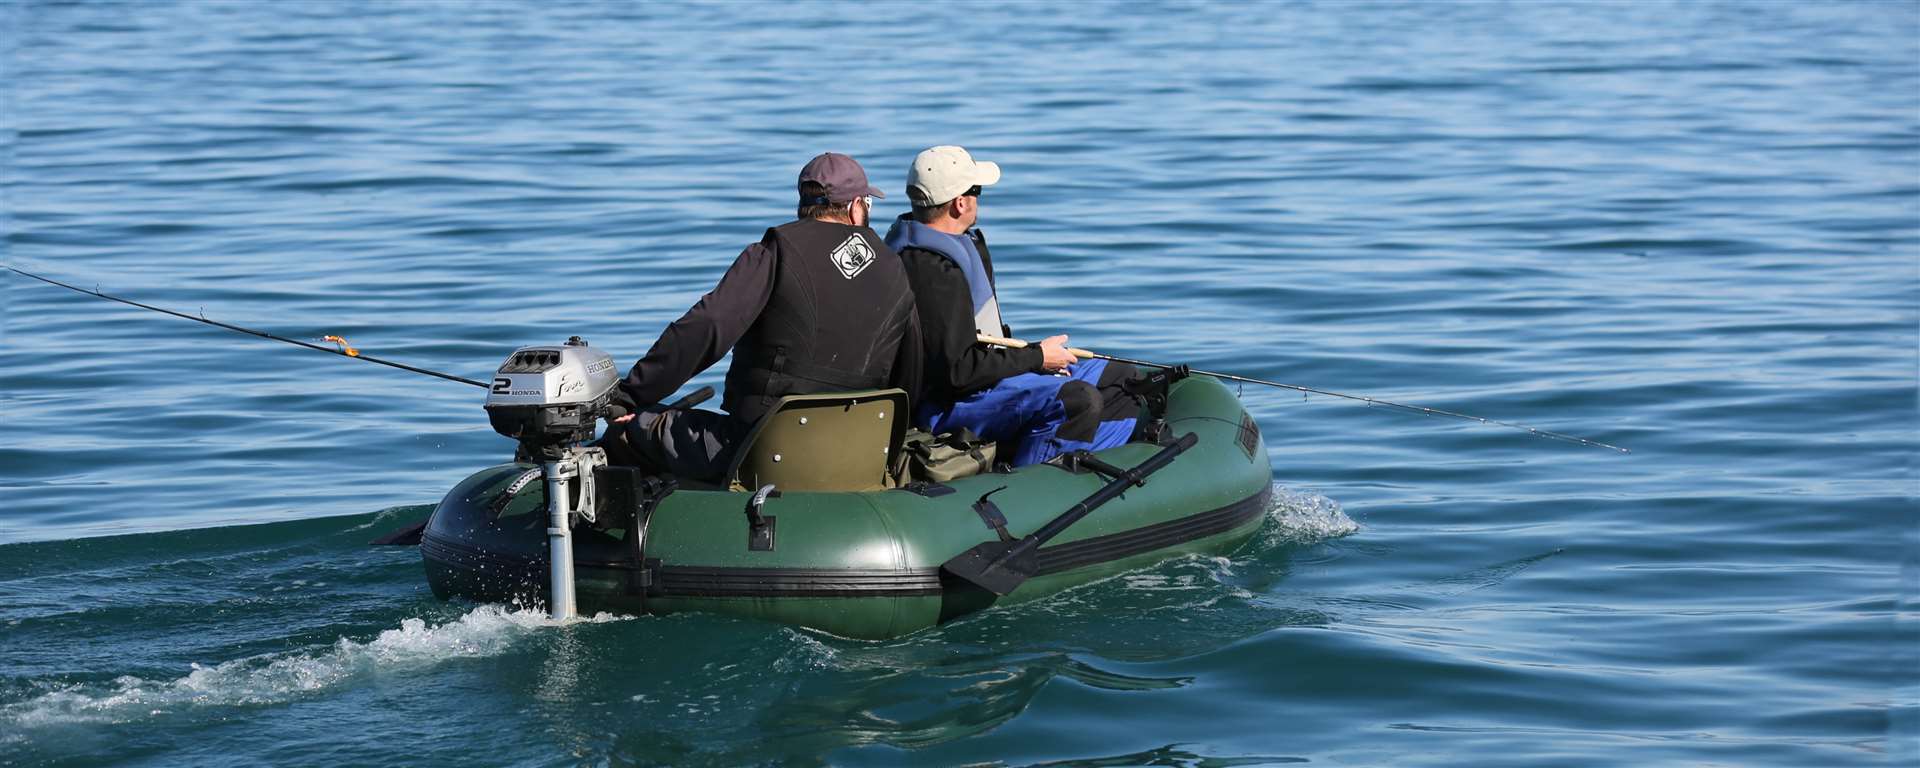 285 Frameless Inflatable 9' Pontoon Fishing Boat - 1 Person- Lightweight,  Portab